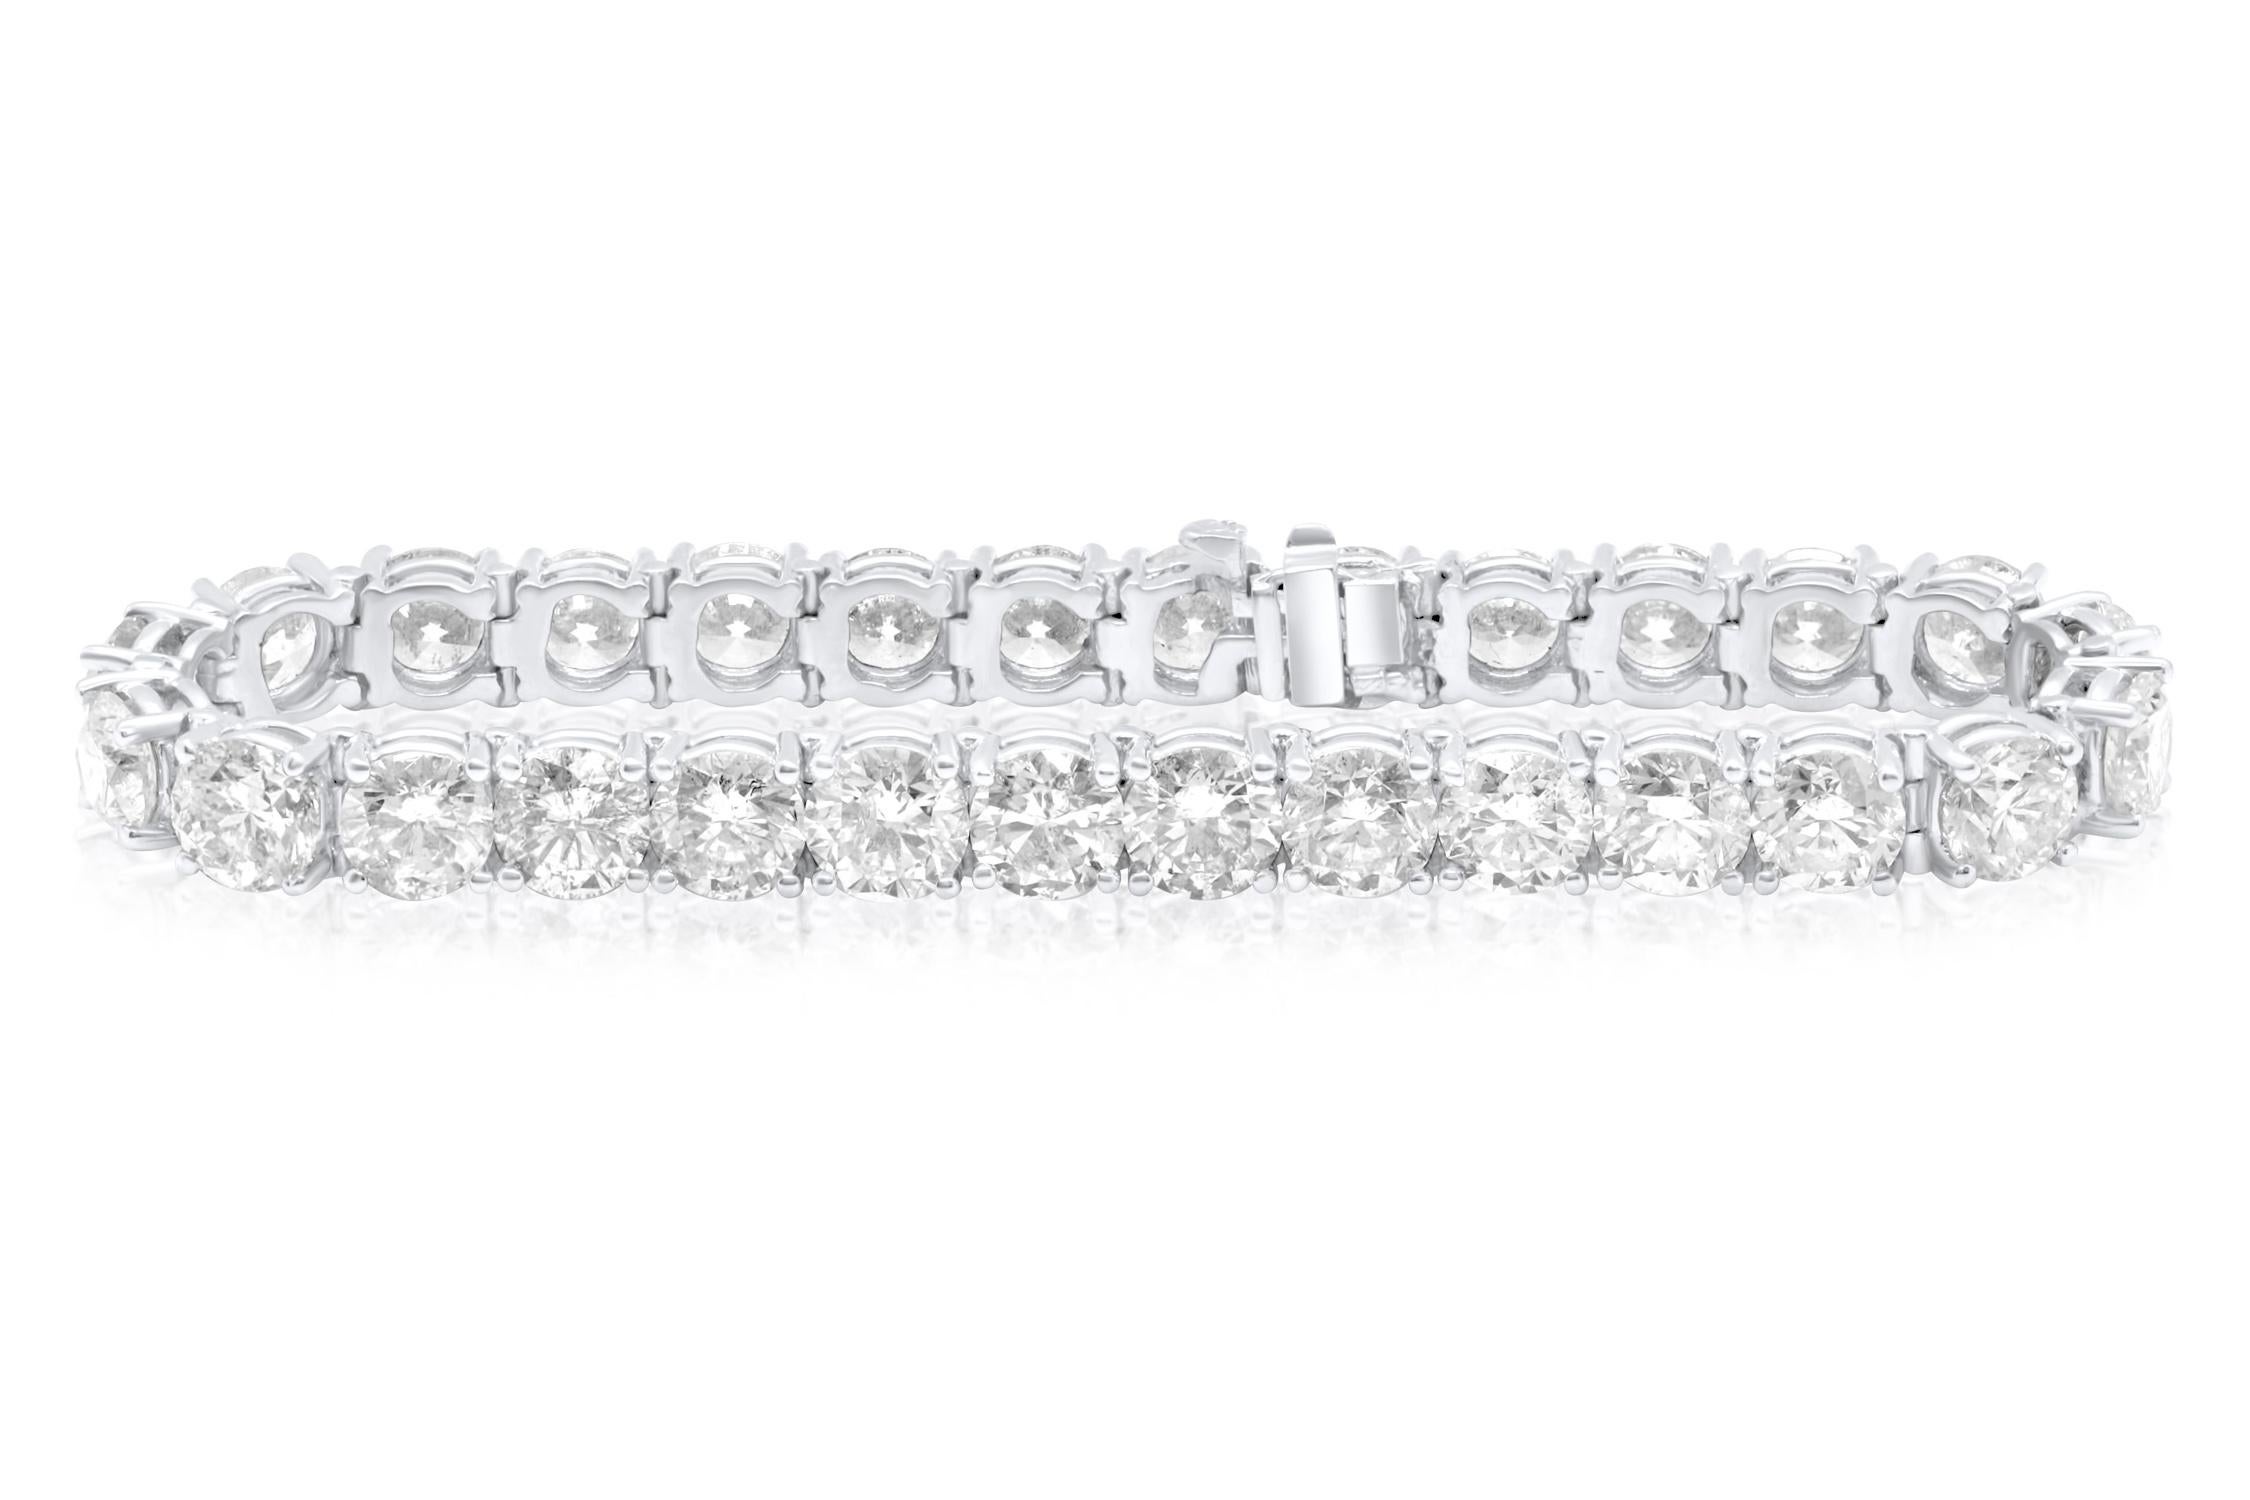 18 kt custom white gold 4 prong diamond tennis bracelet  13.50 cts of round diamonds 0.35 each 38 stones diamond FG color SI clarity.  Excellent Cut.